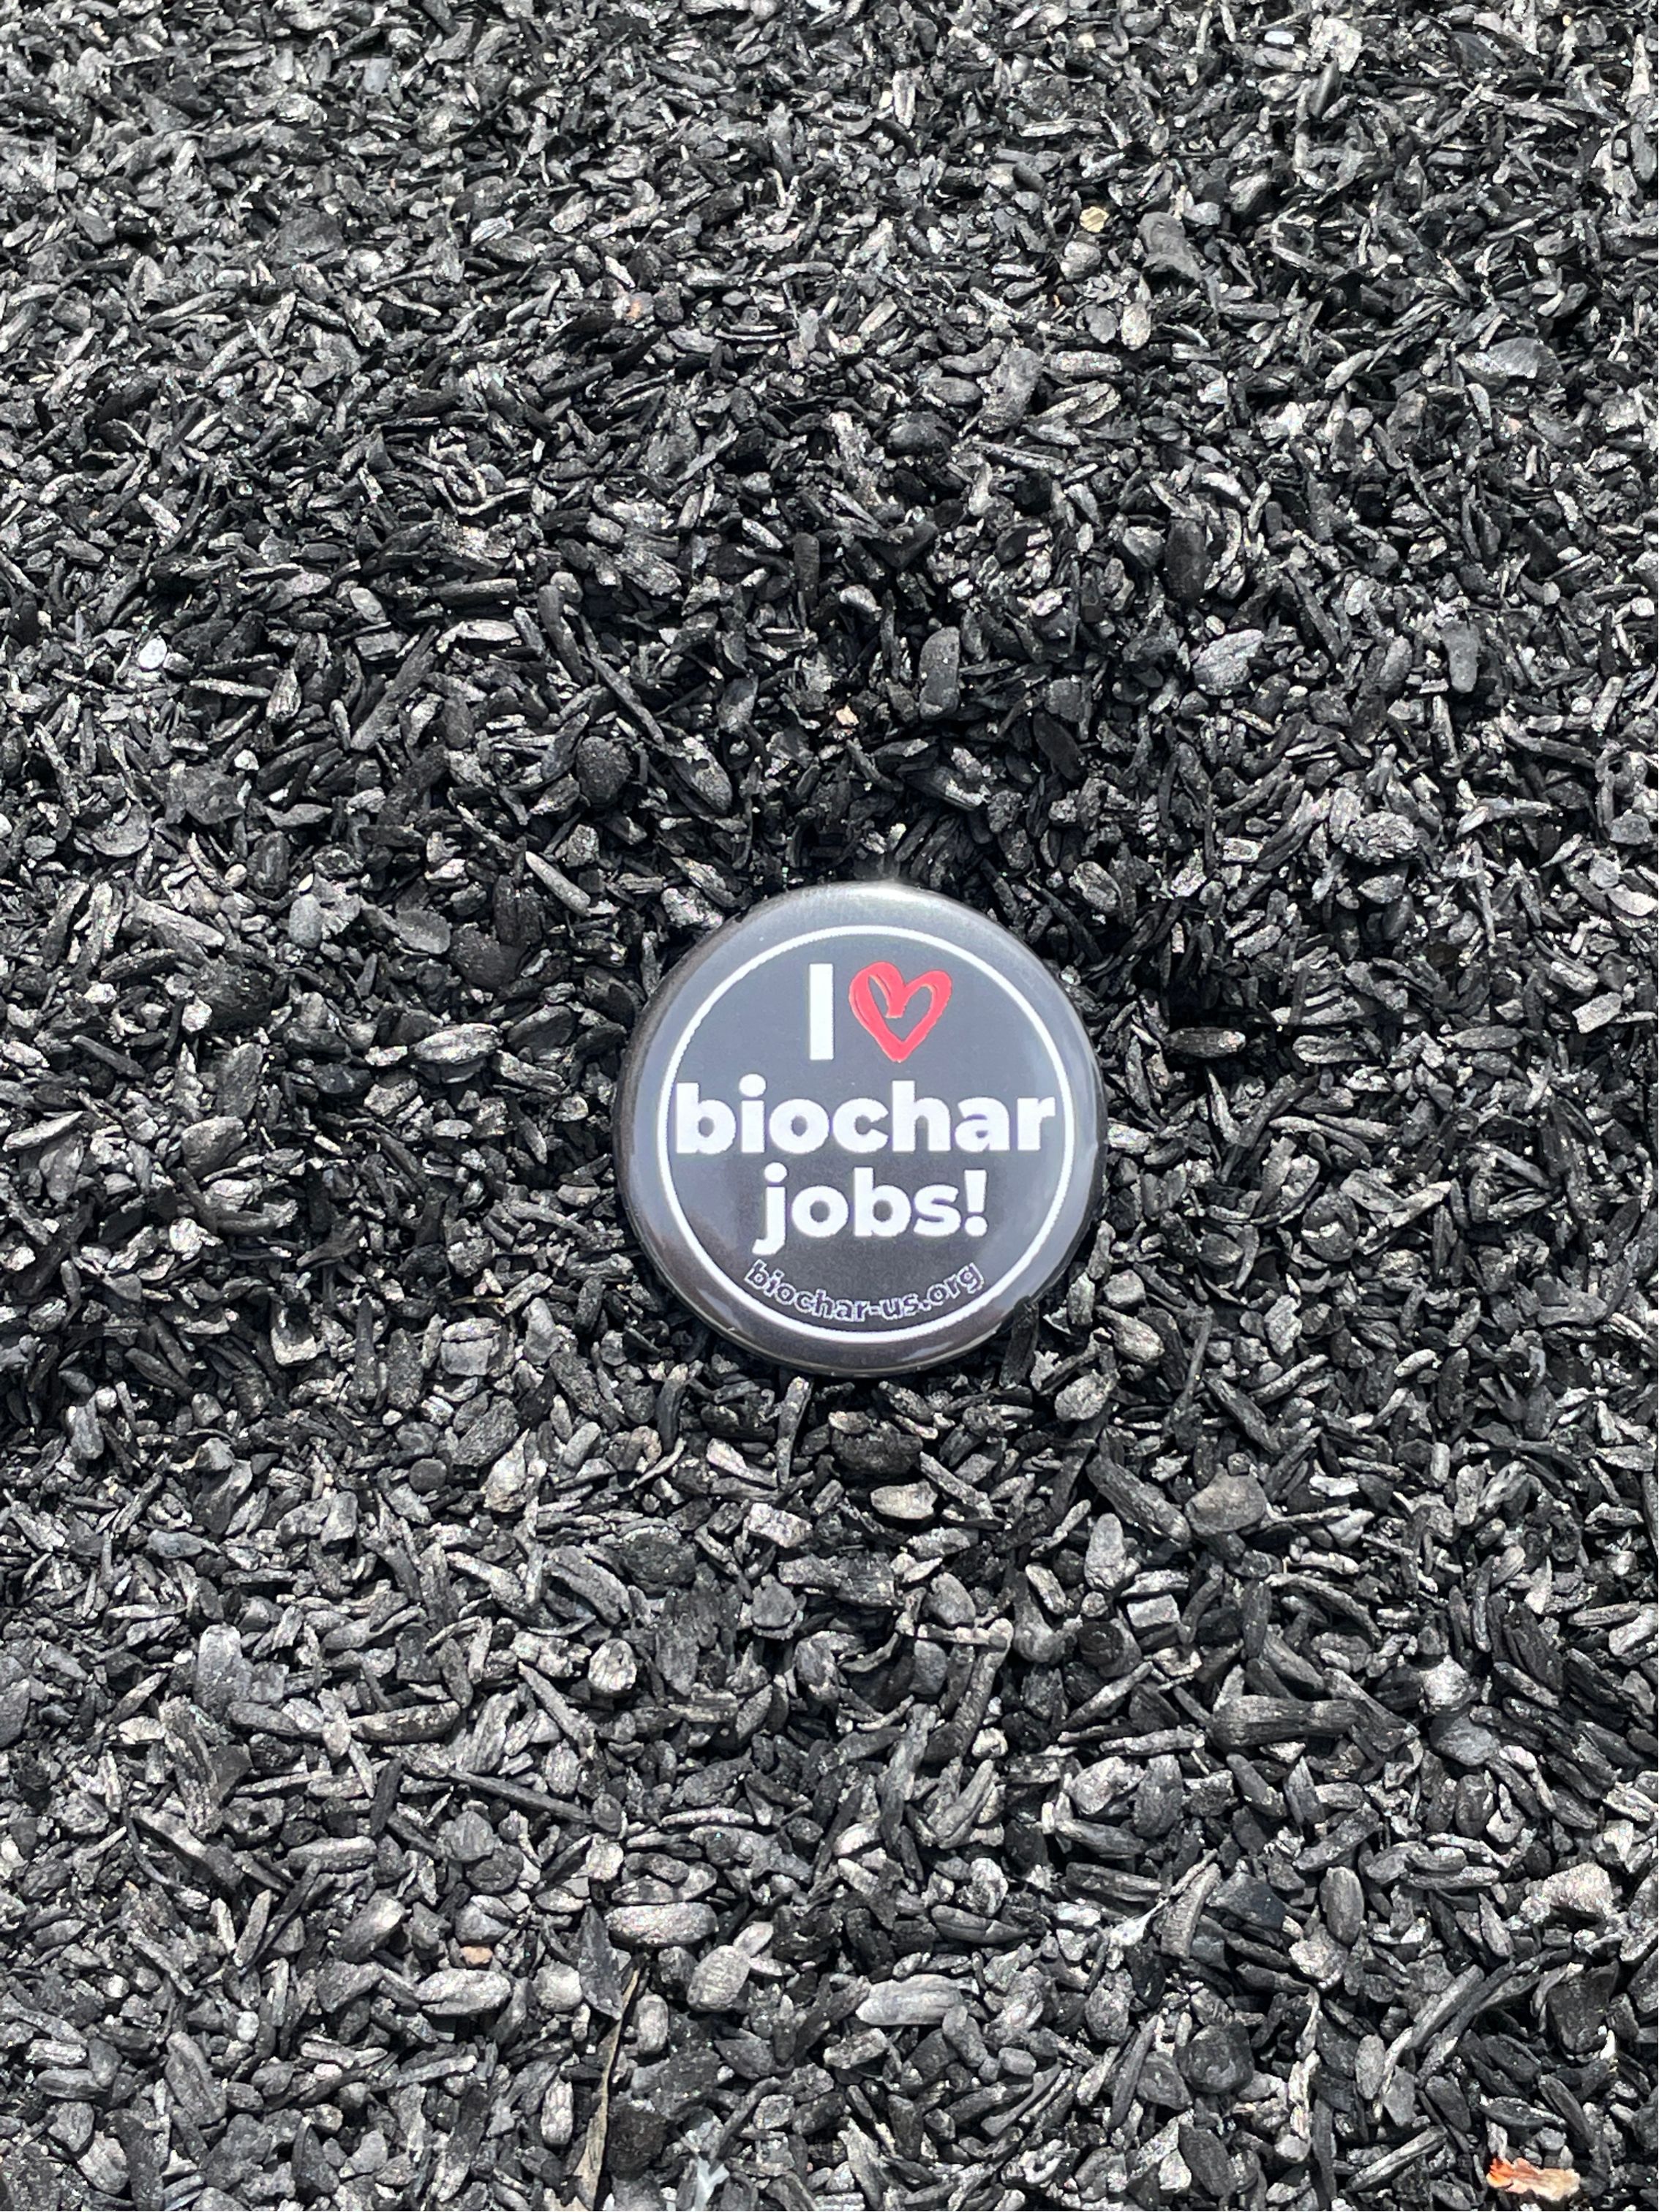 biochar image with button saying "I heart biochar jobs"